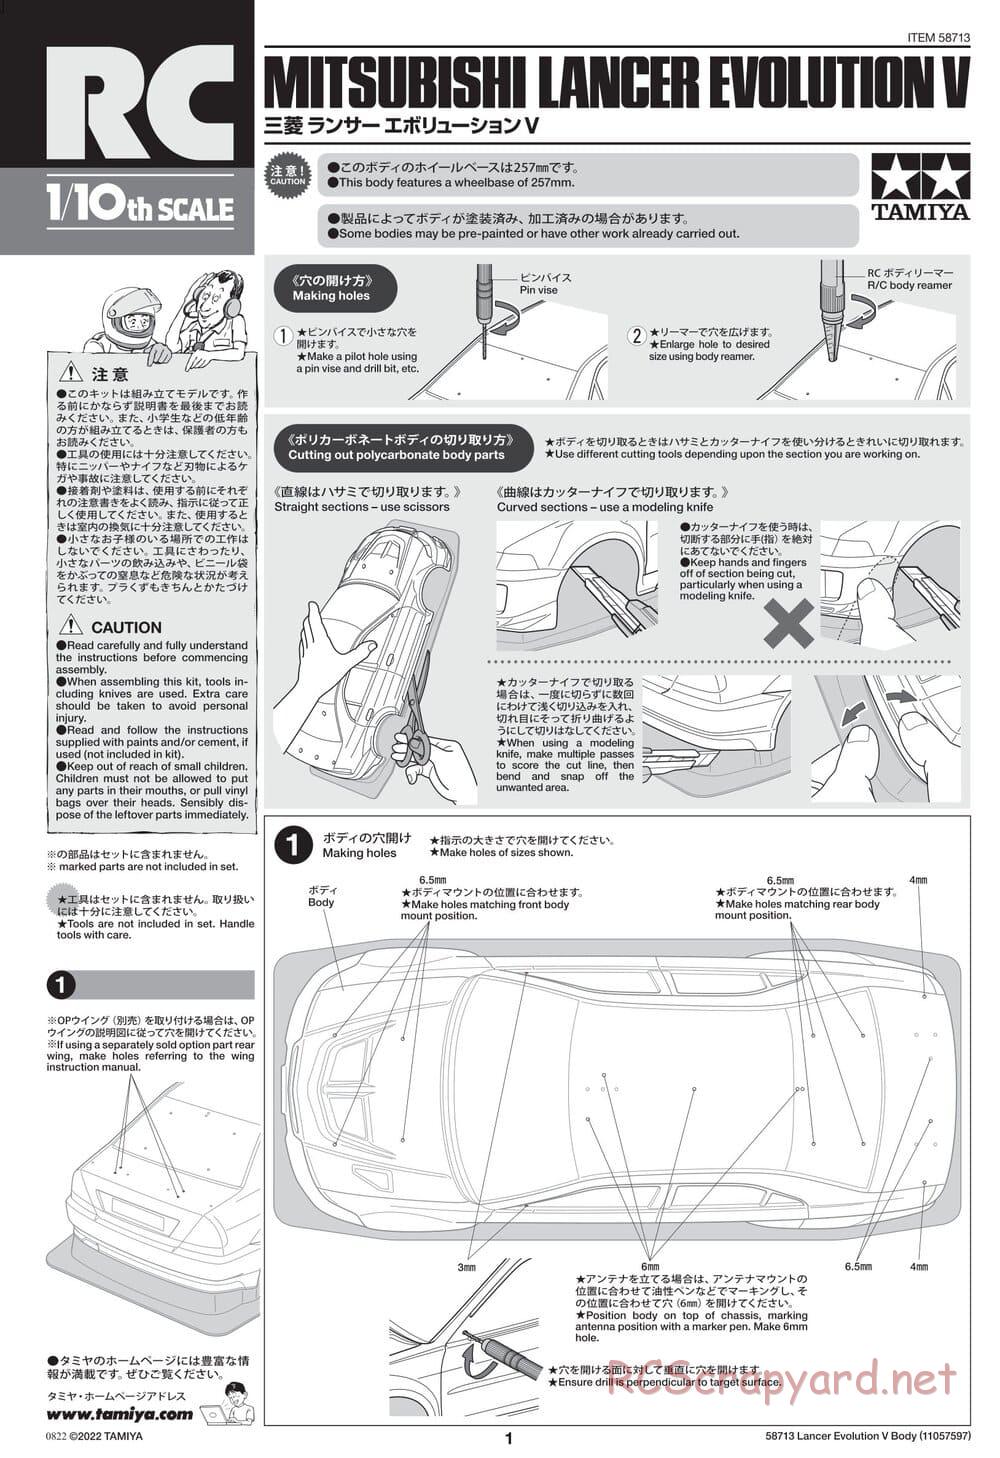 Tamiya - Mitsubishi Lancer Evolution V - TT-02 Chassis - Body Manual - Page 1